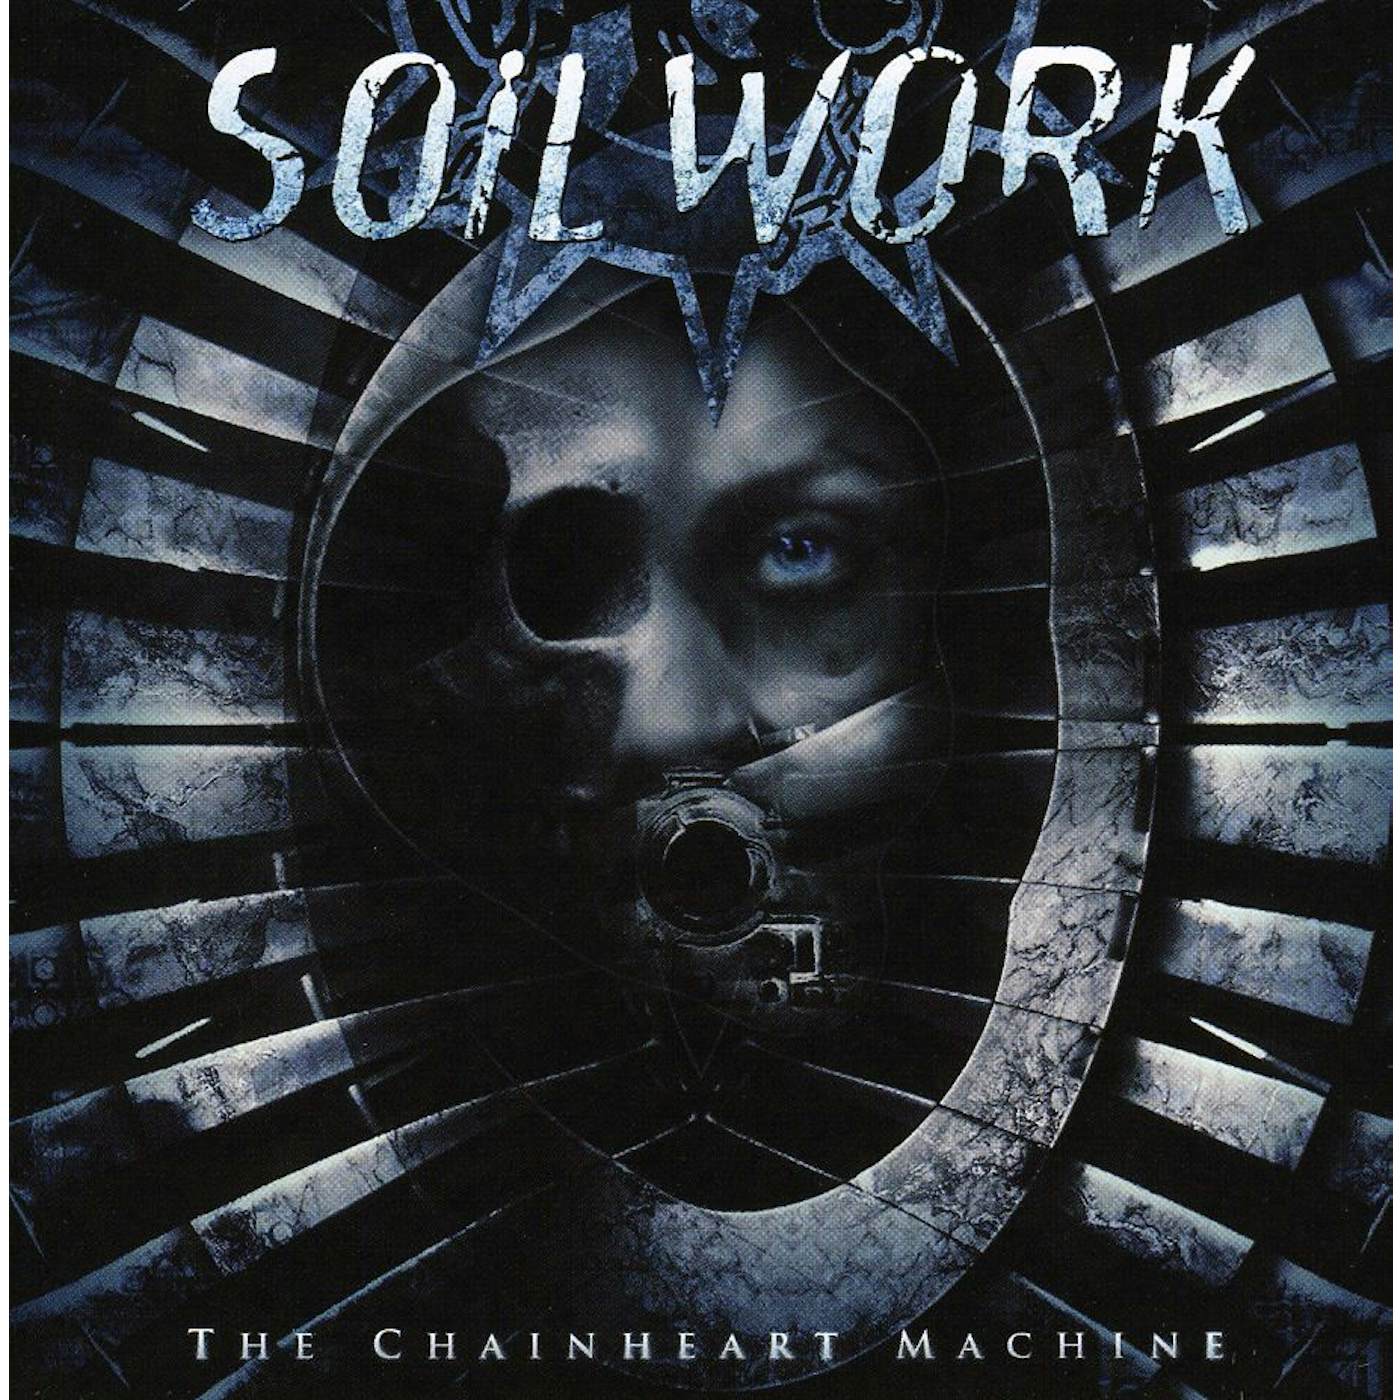 Soilwork CHAINHEART MACHINE CD